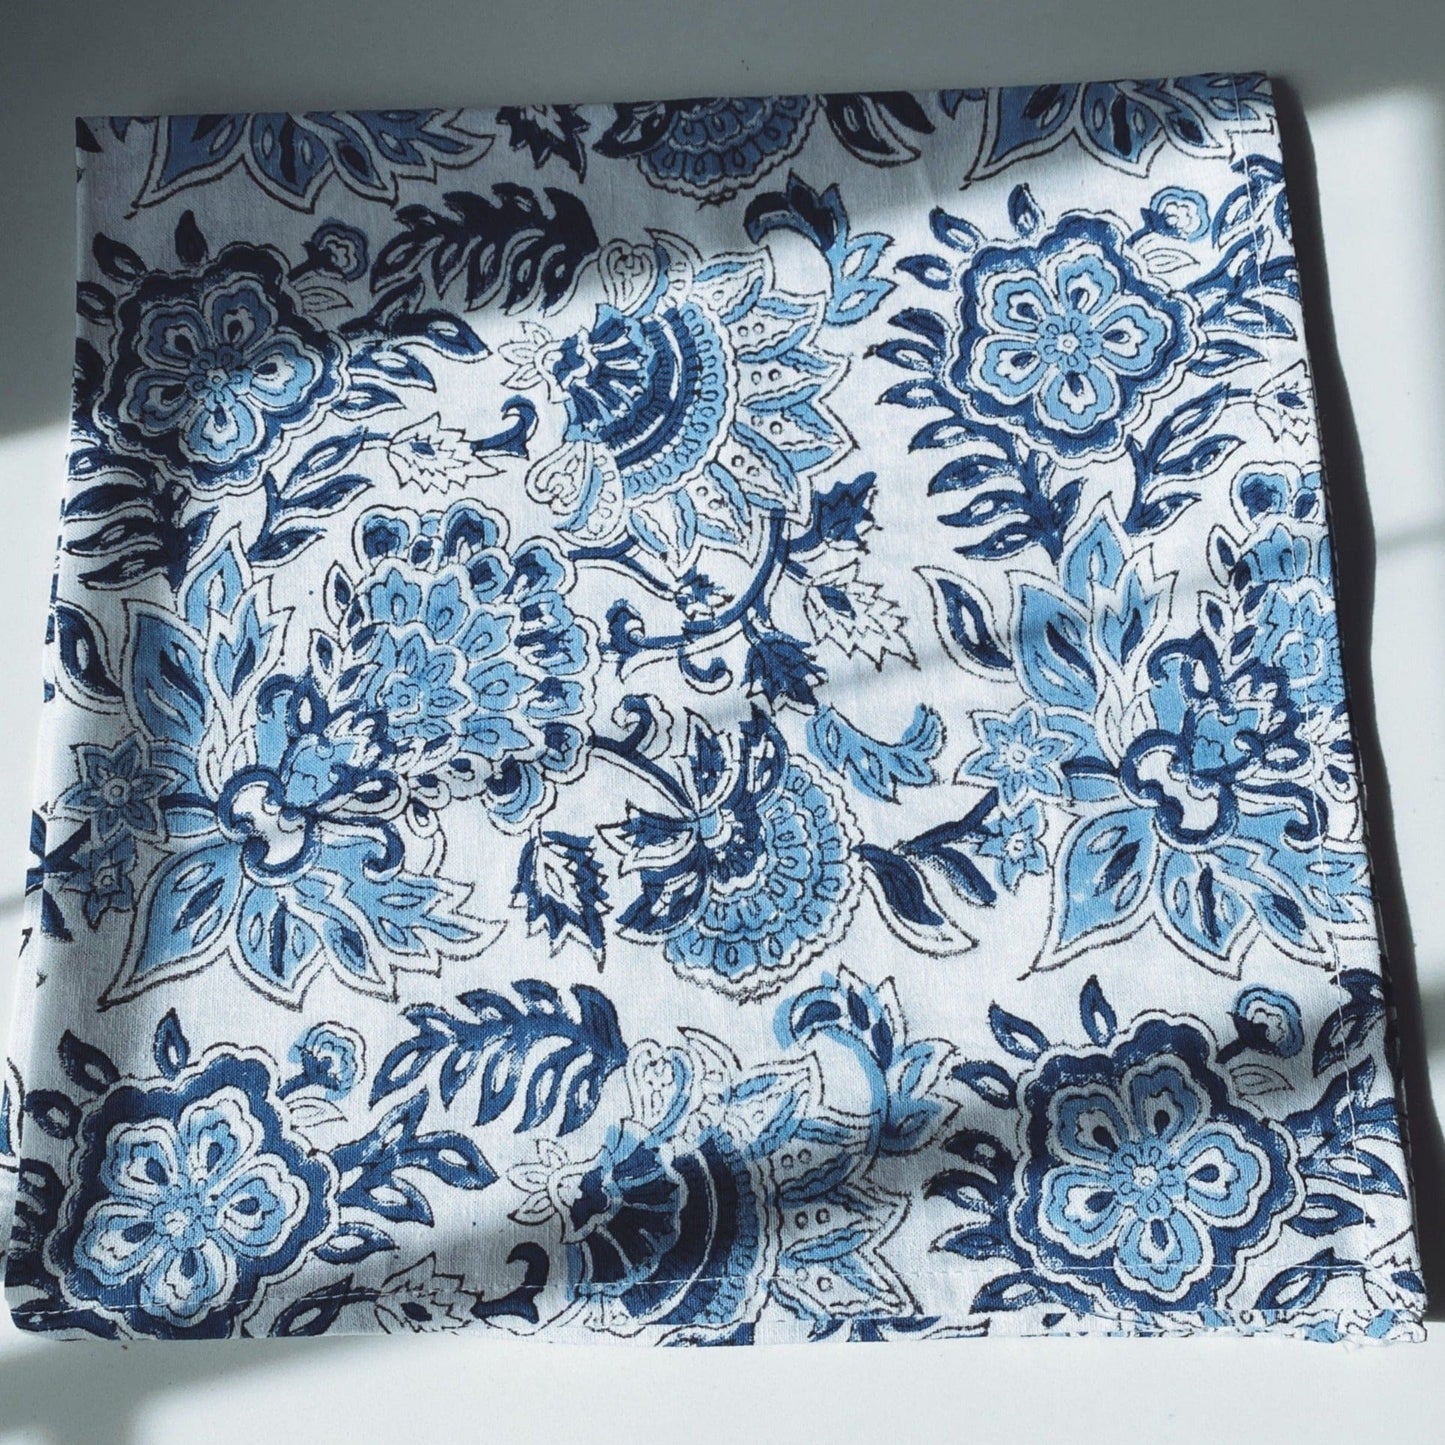 Kapoor Carpets & Textiles Kitchenalia Napkins - Blue Botanical - Set of 4 18724